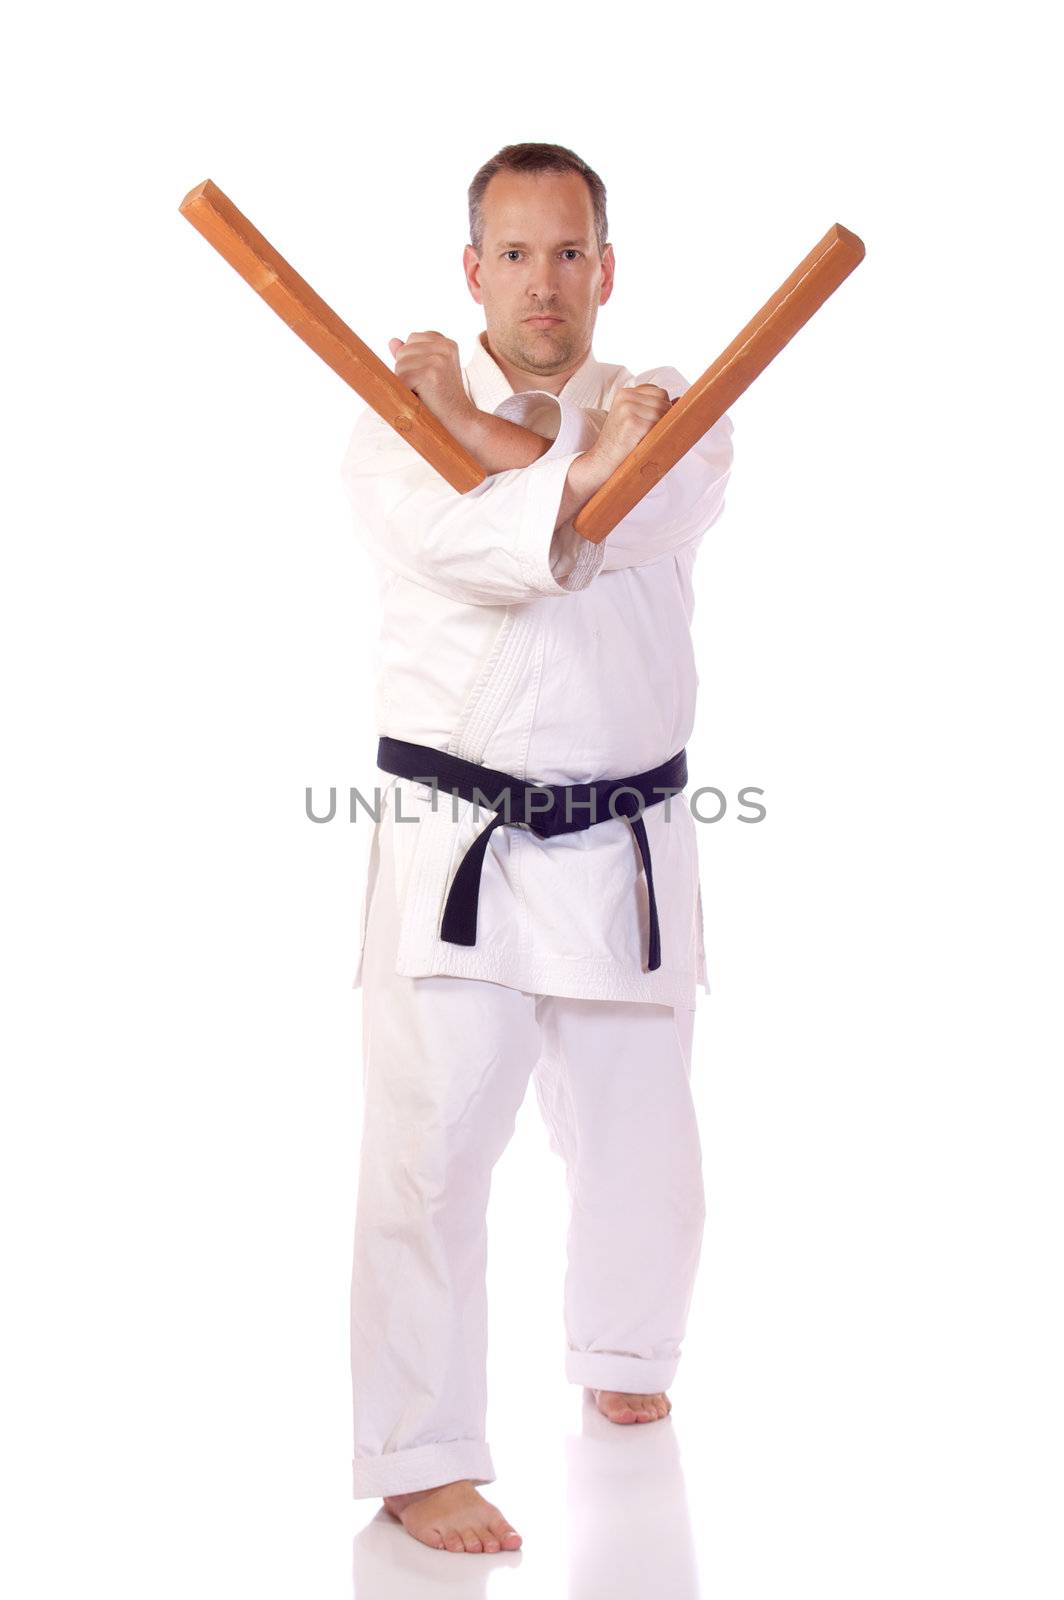 Man in karate-gi holding a pair of tonfa